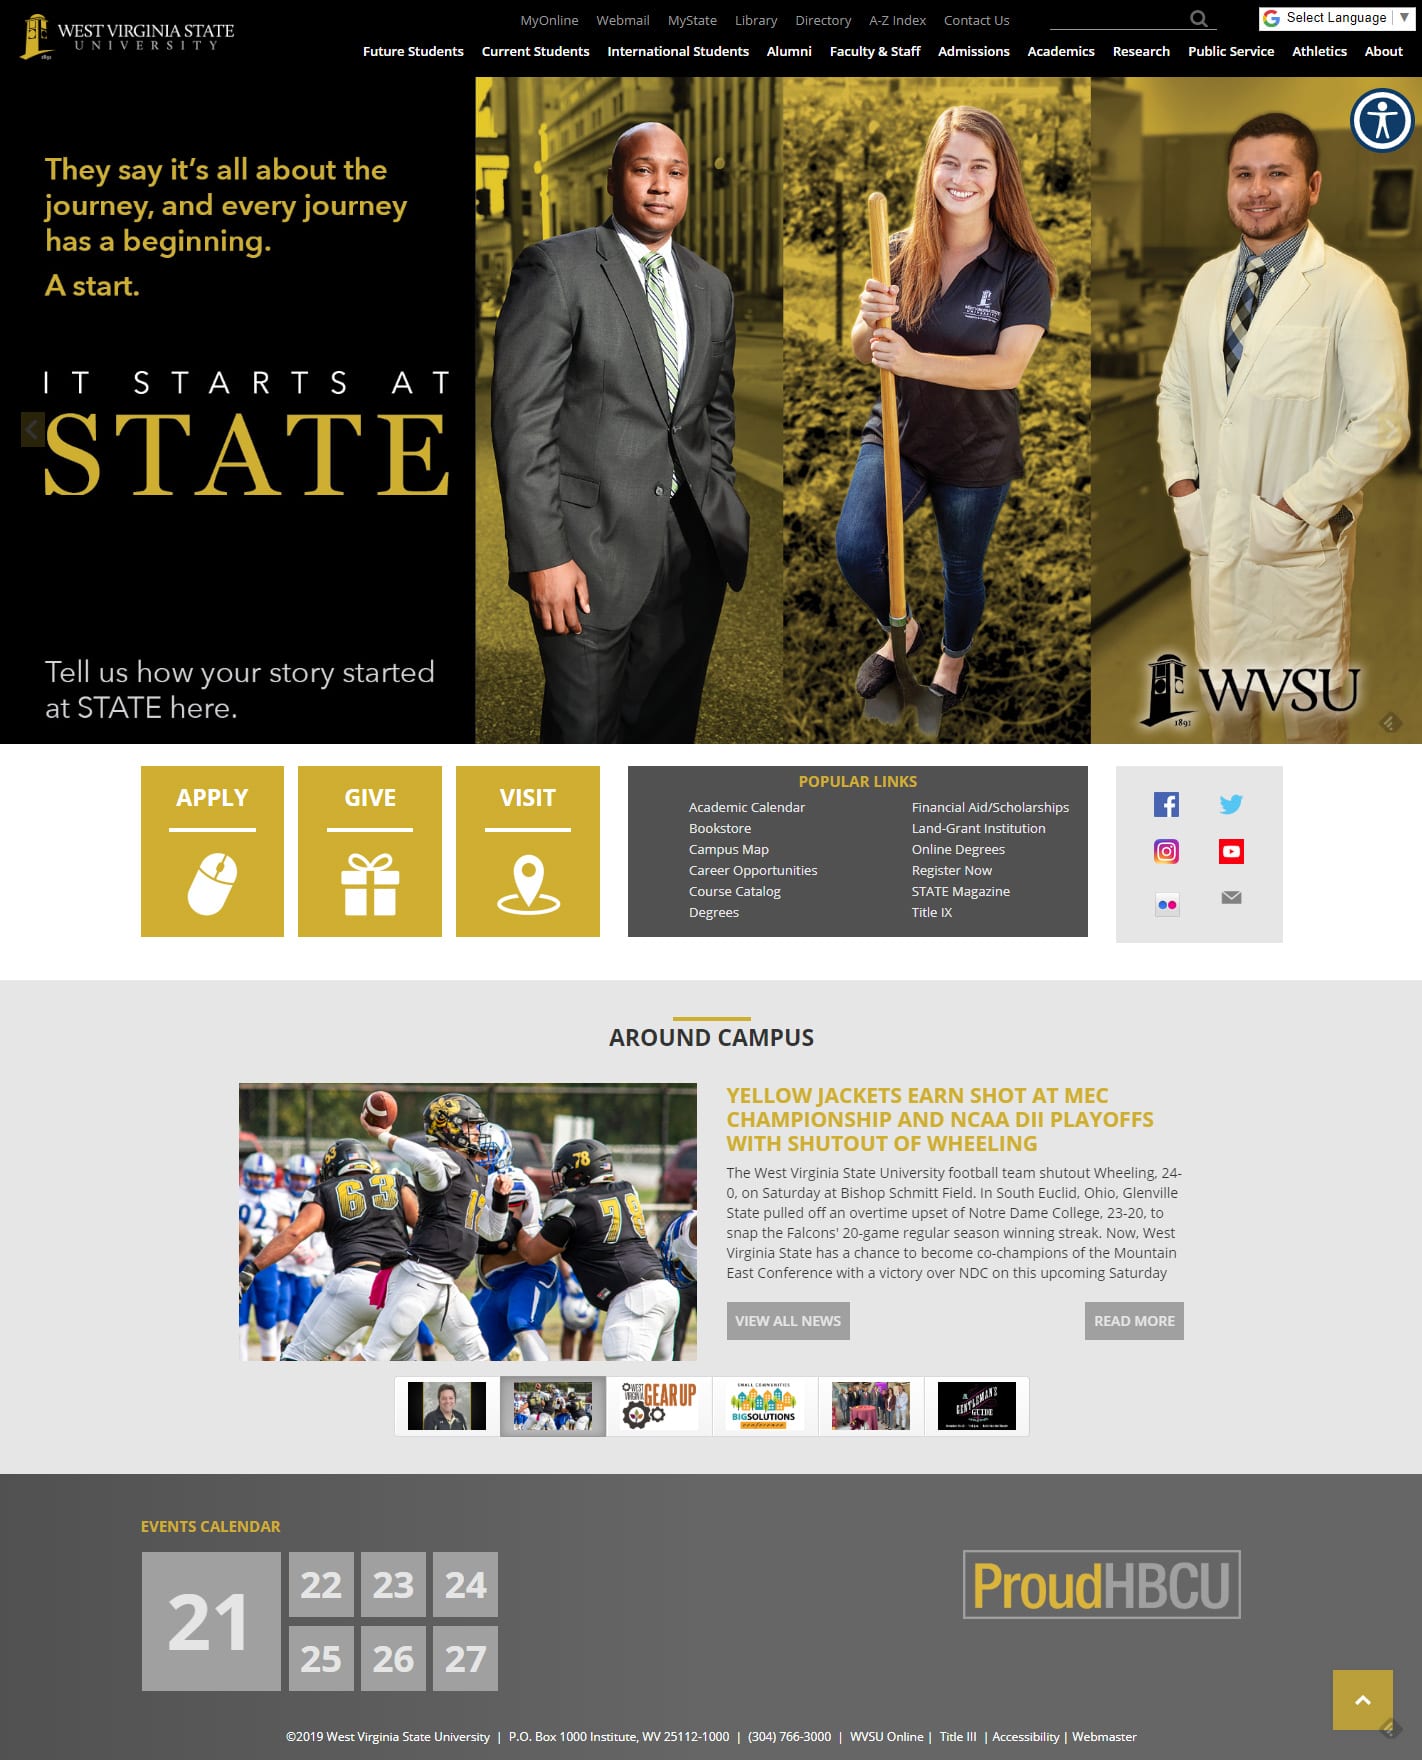 West Virginia ADA Complaint University Website Design and Development